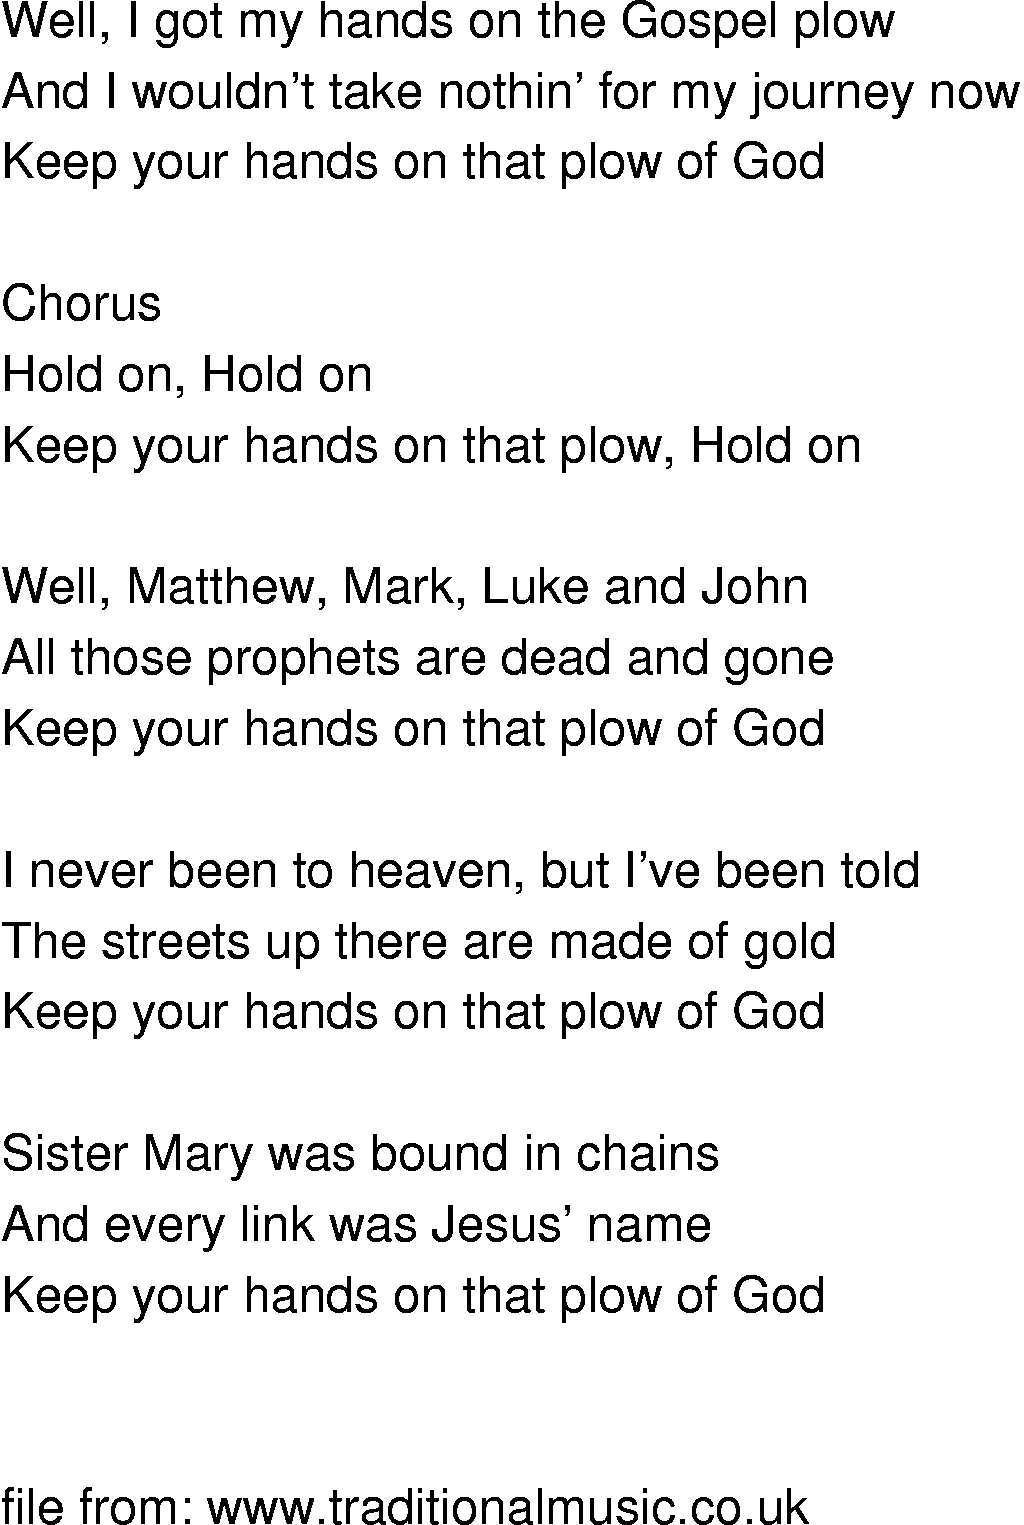 Old-Time (oldtimey) Song Lyrics - gospel plow